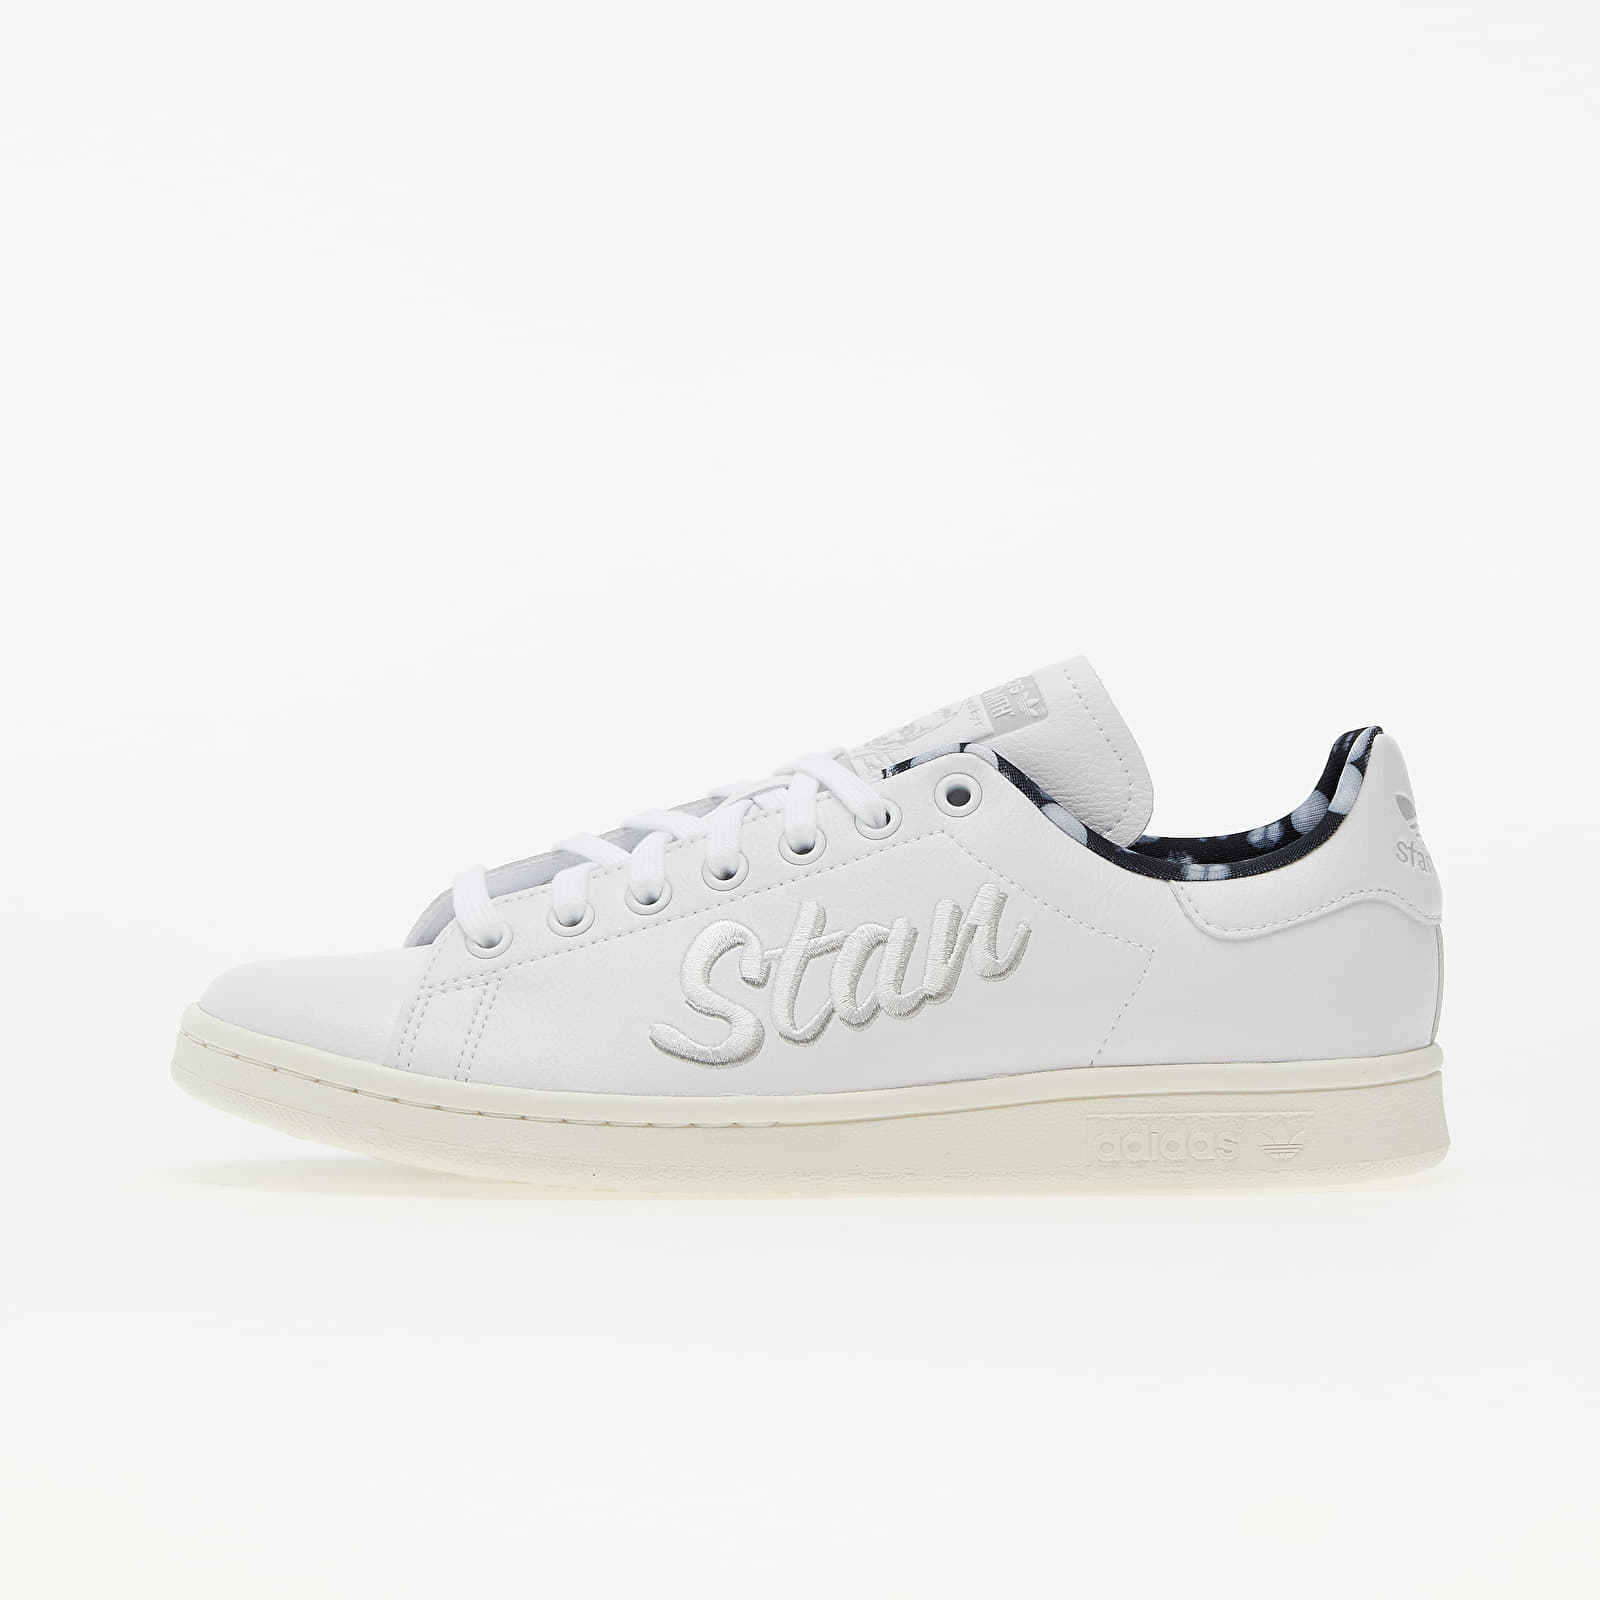 Men's shoes adidas Stan Smith Ftw White/ Off White/ Core Black